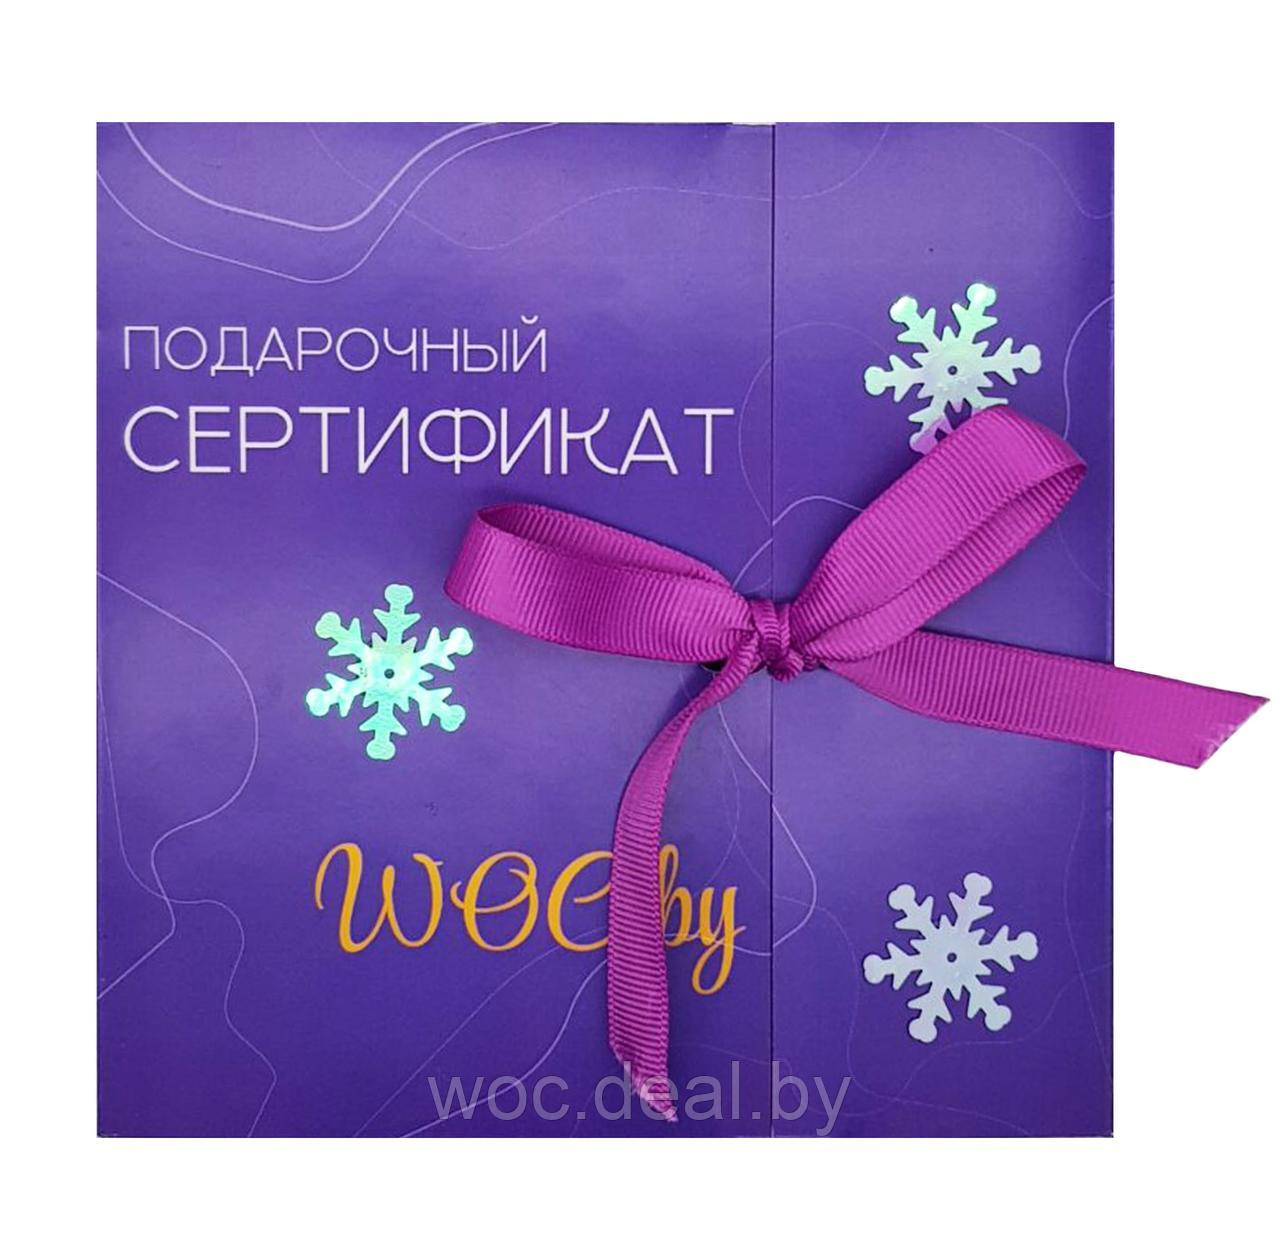 Подарочный сертификат woc.by, 100 BYN